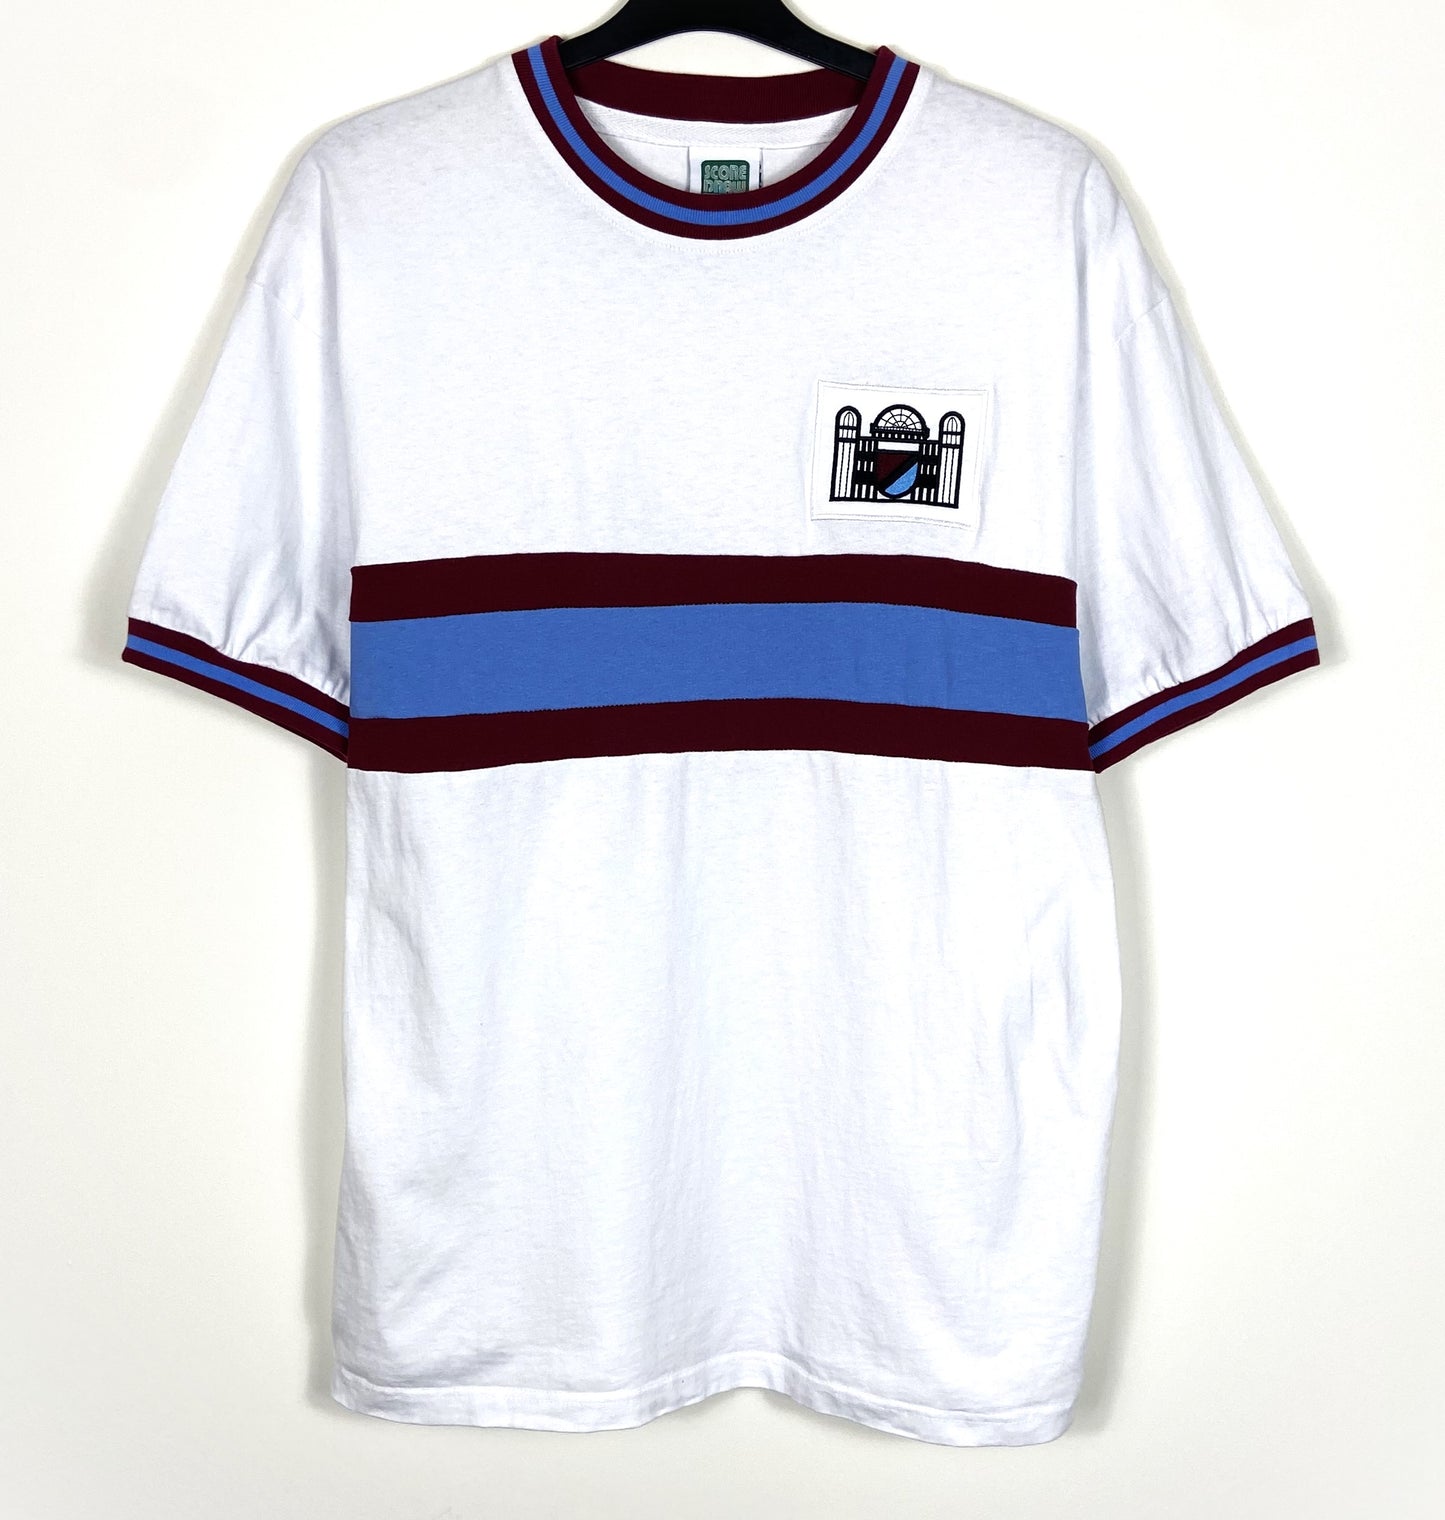 1960 Crystal Palace Score Draw Football Shirt Men's Large